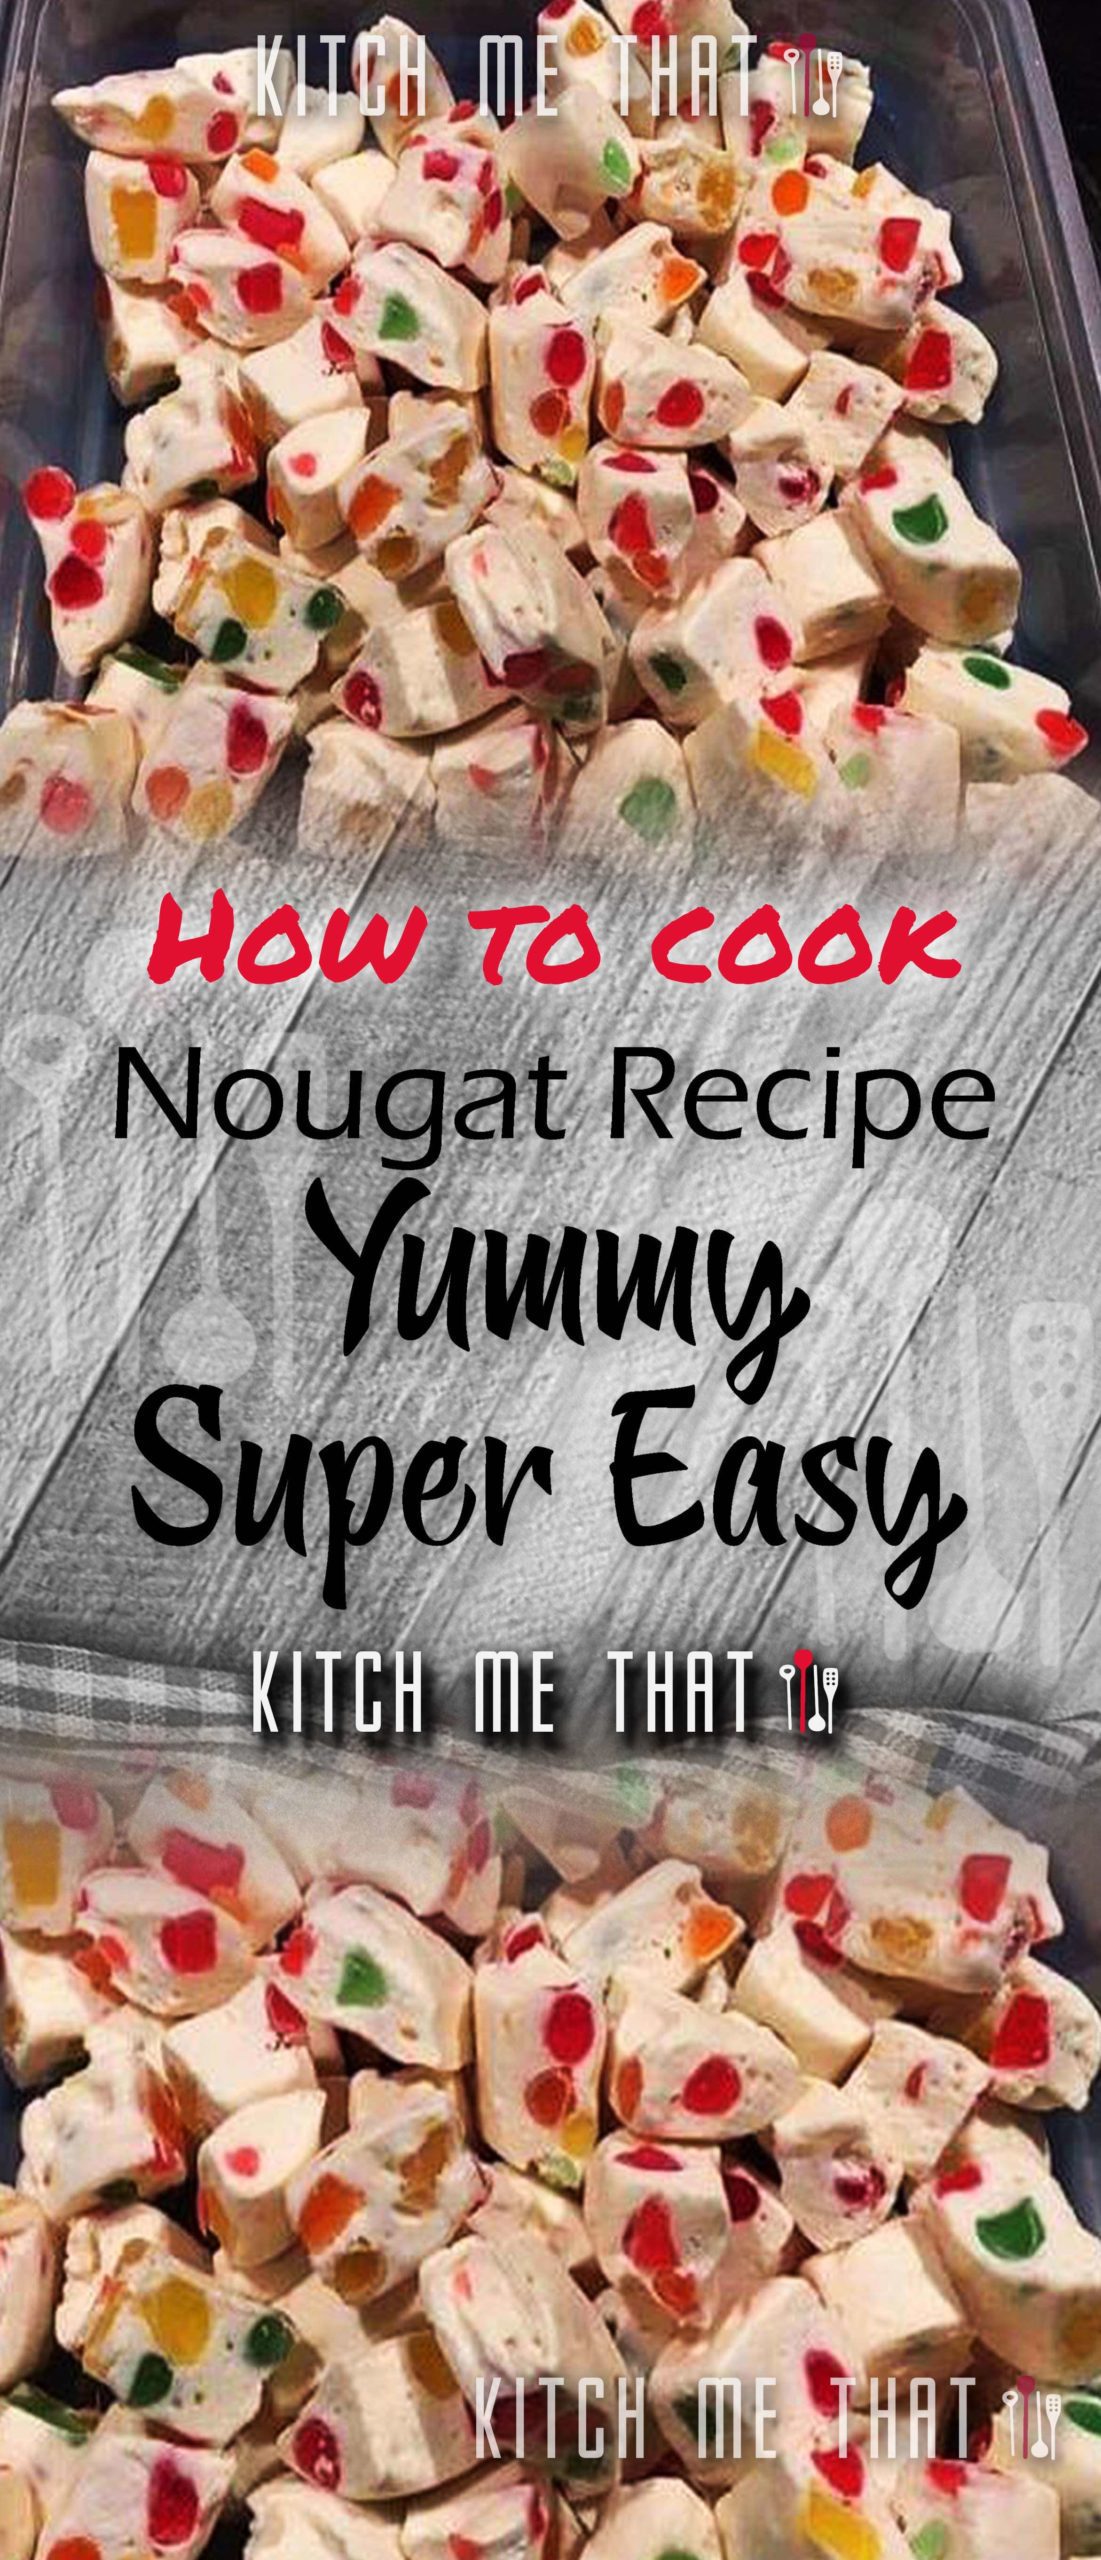 Nougat Recipe -Yummy